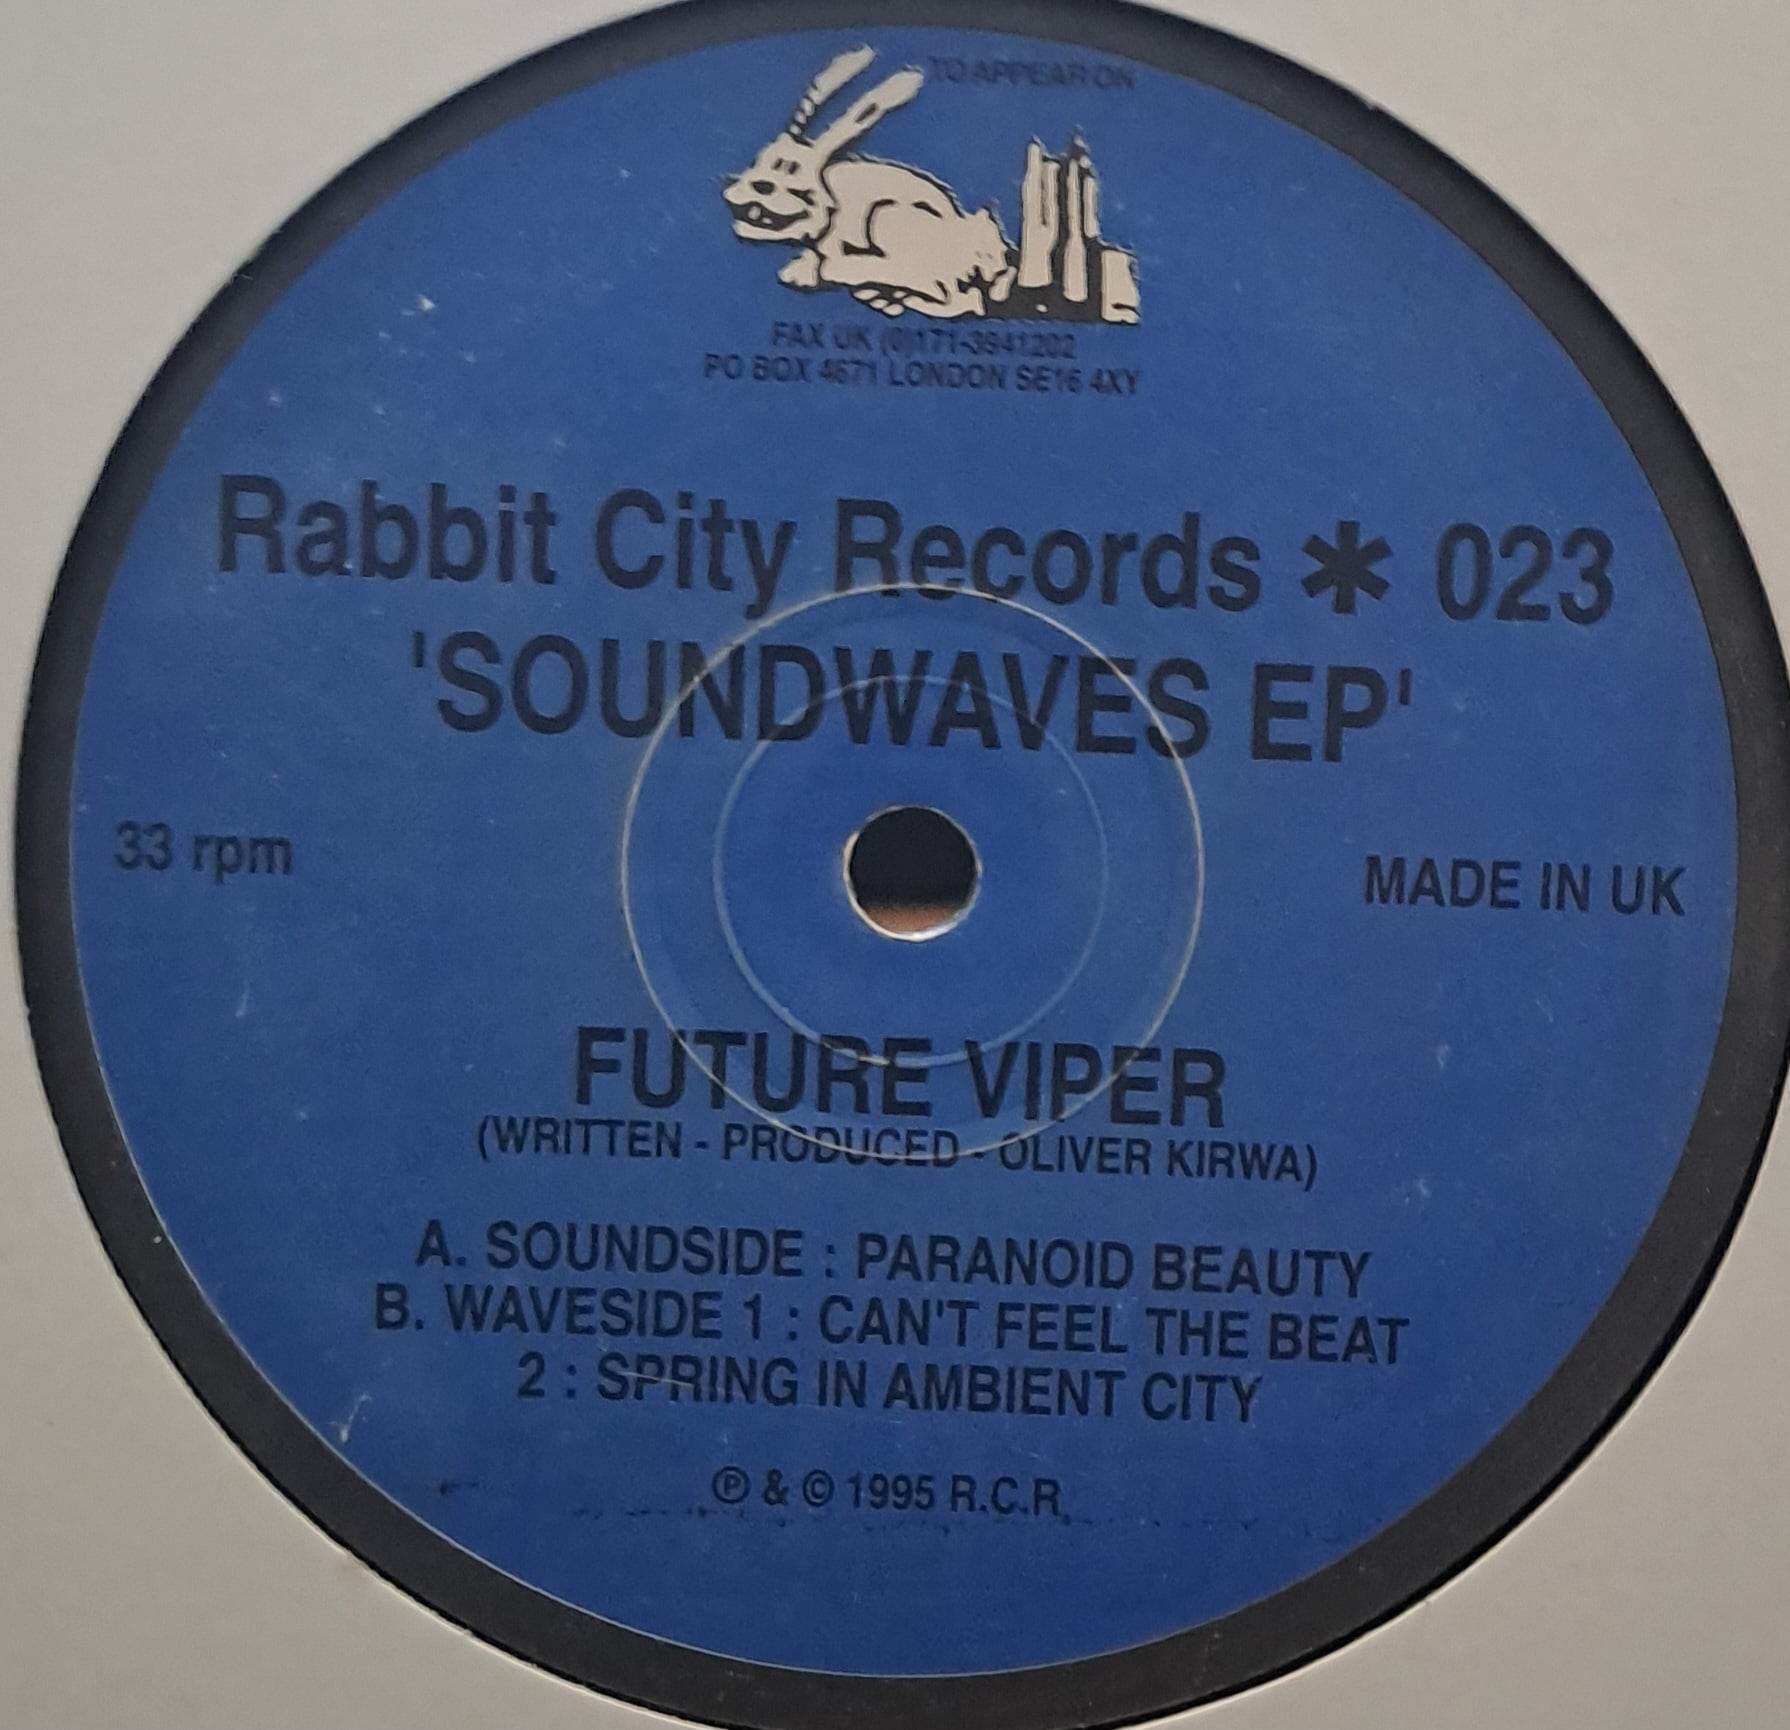 Rabbit City Records 23 - vinyle gabber